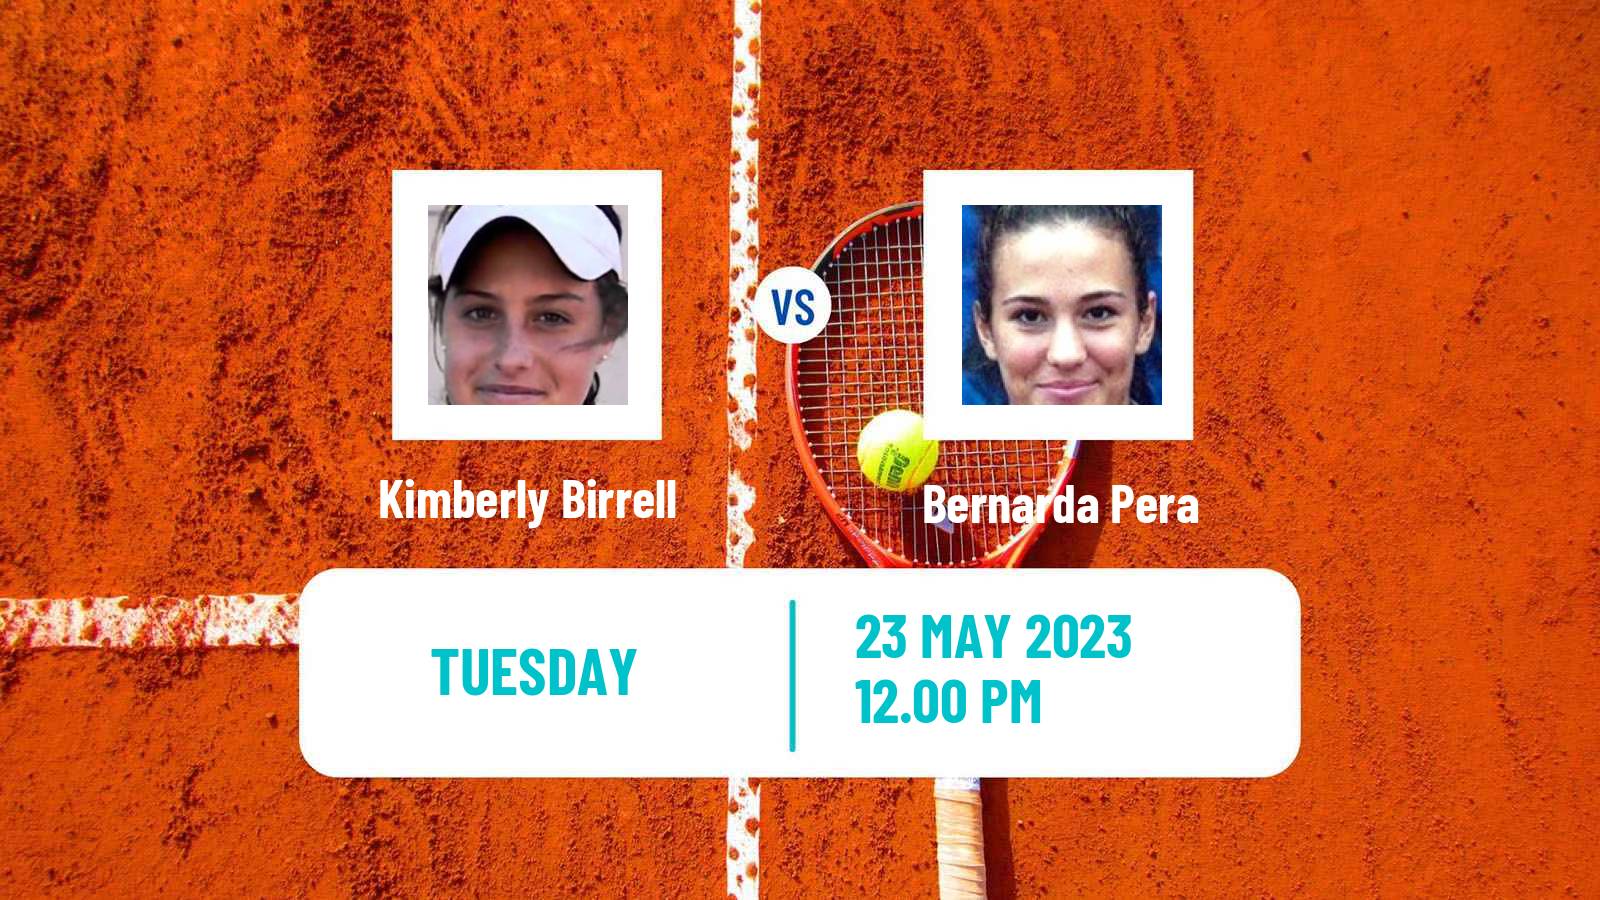 Tennis WTA Strasbourg Kimberly Birrell - Bernarda Pera